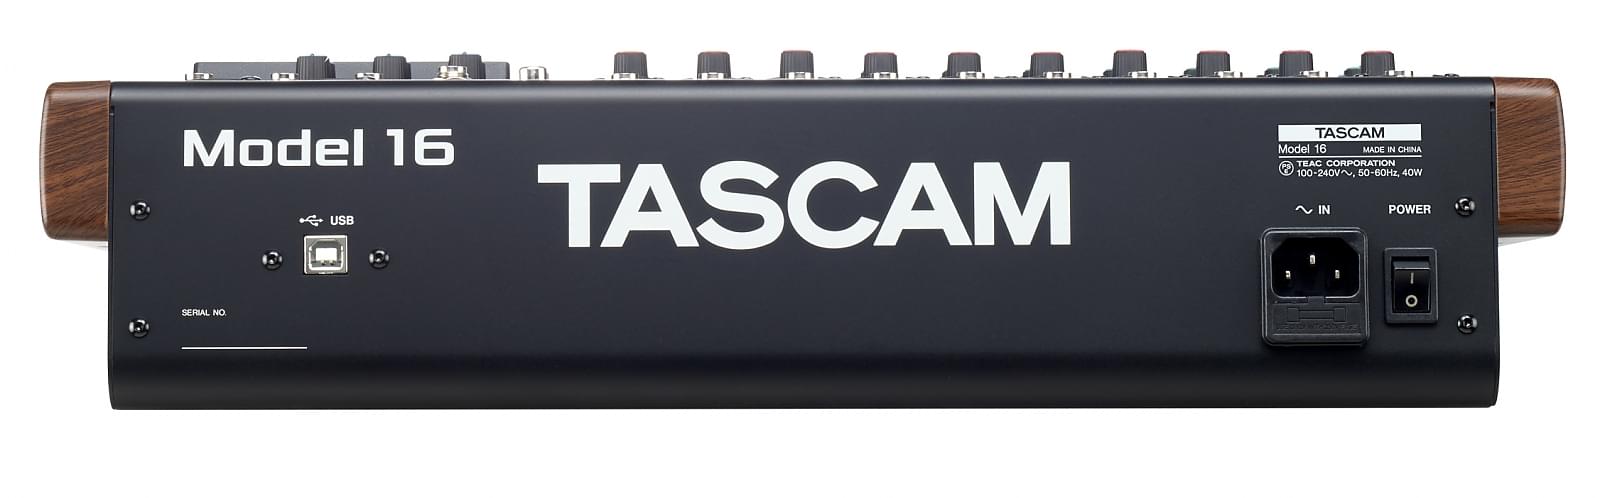 Rear view | Tascam Model 16